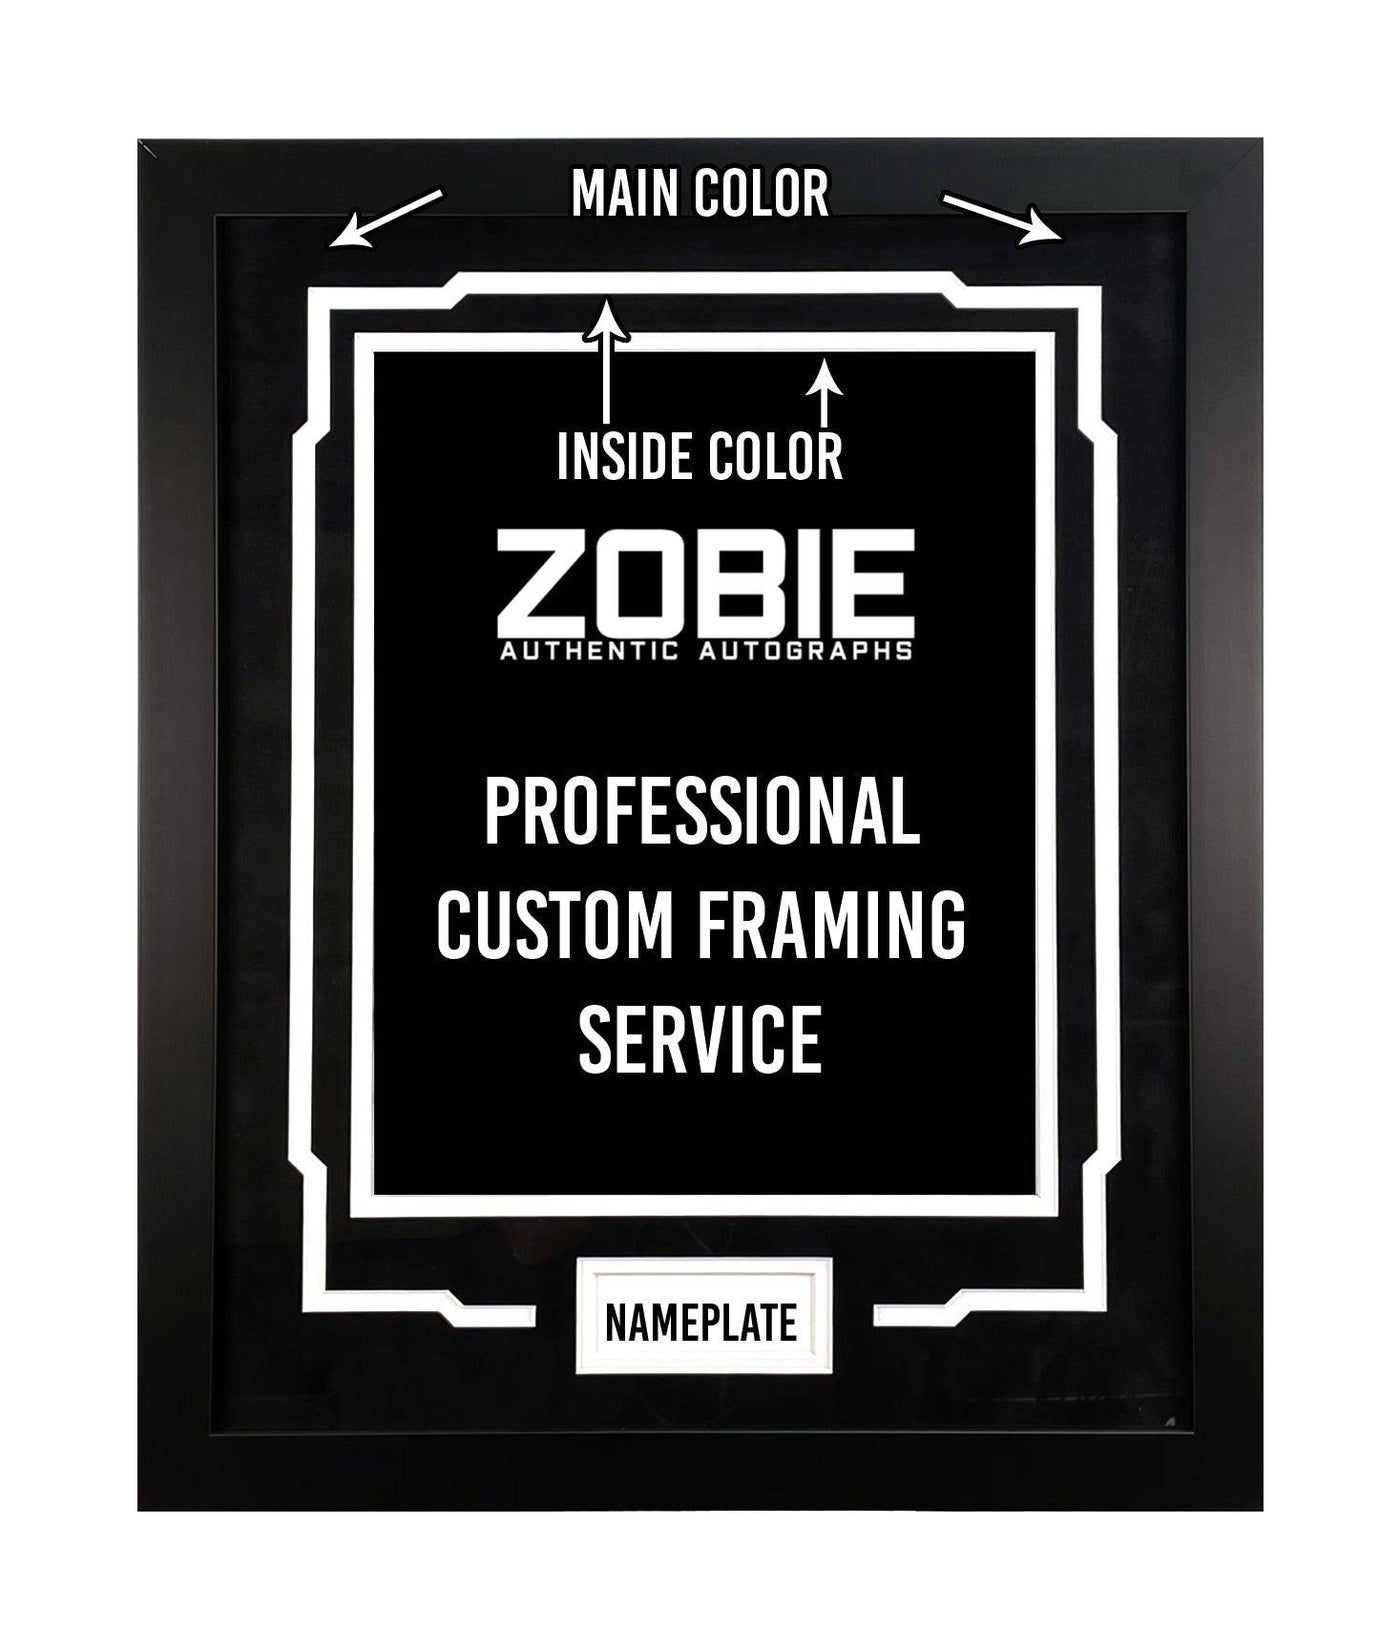 Zobie Professional Custom Framing Service - At-Home Framing Kit